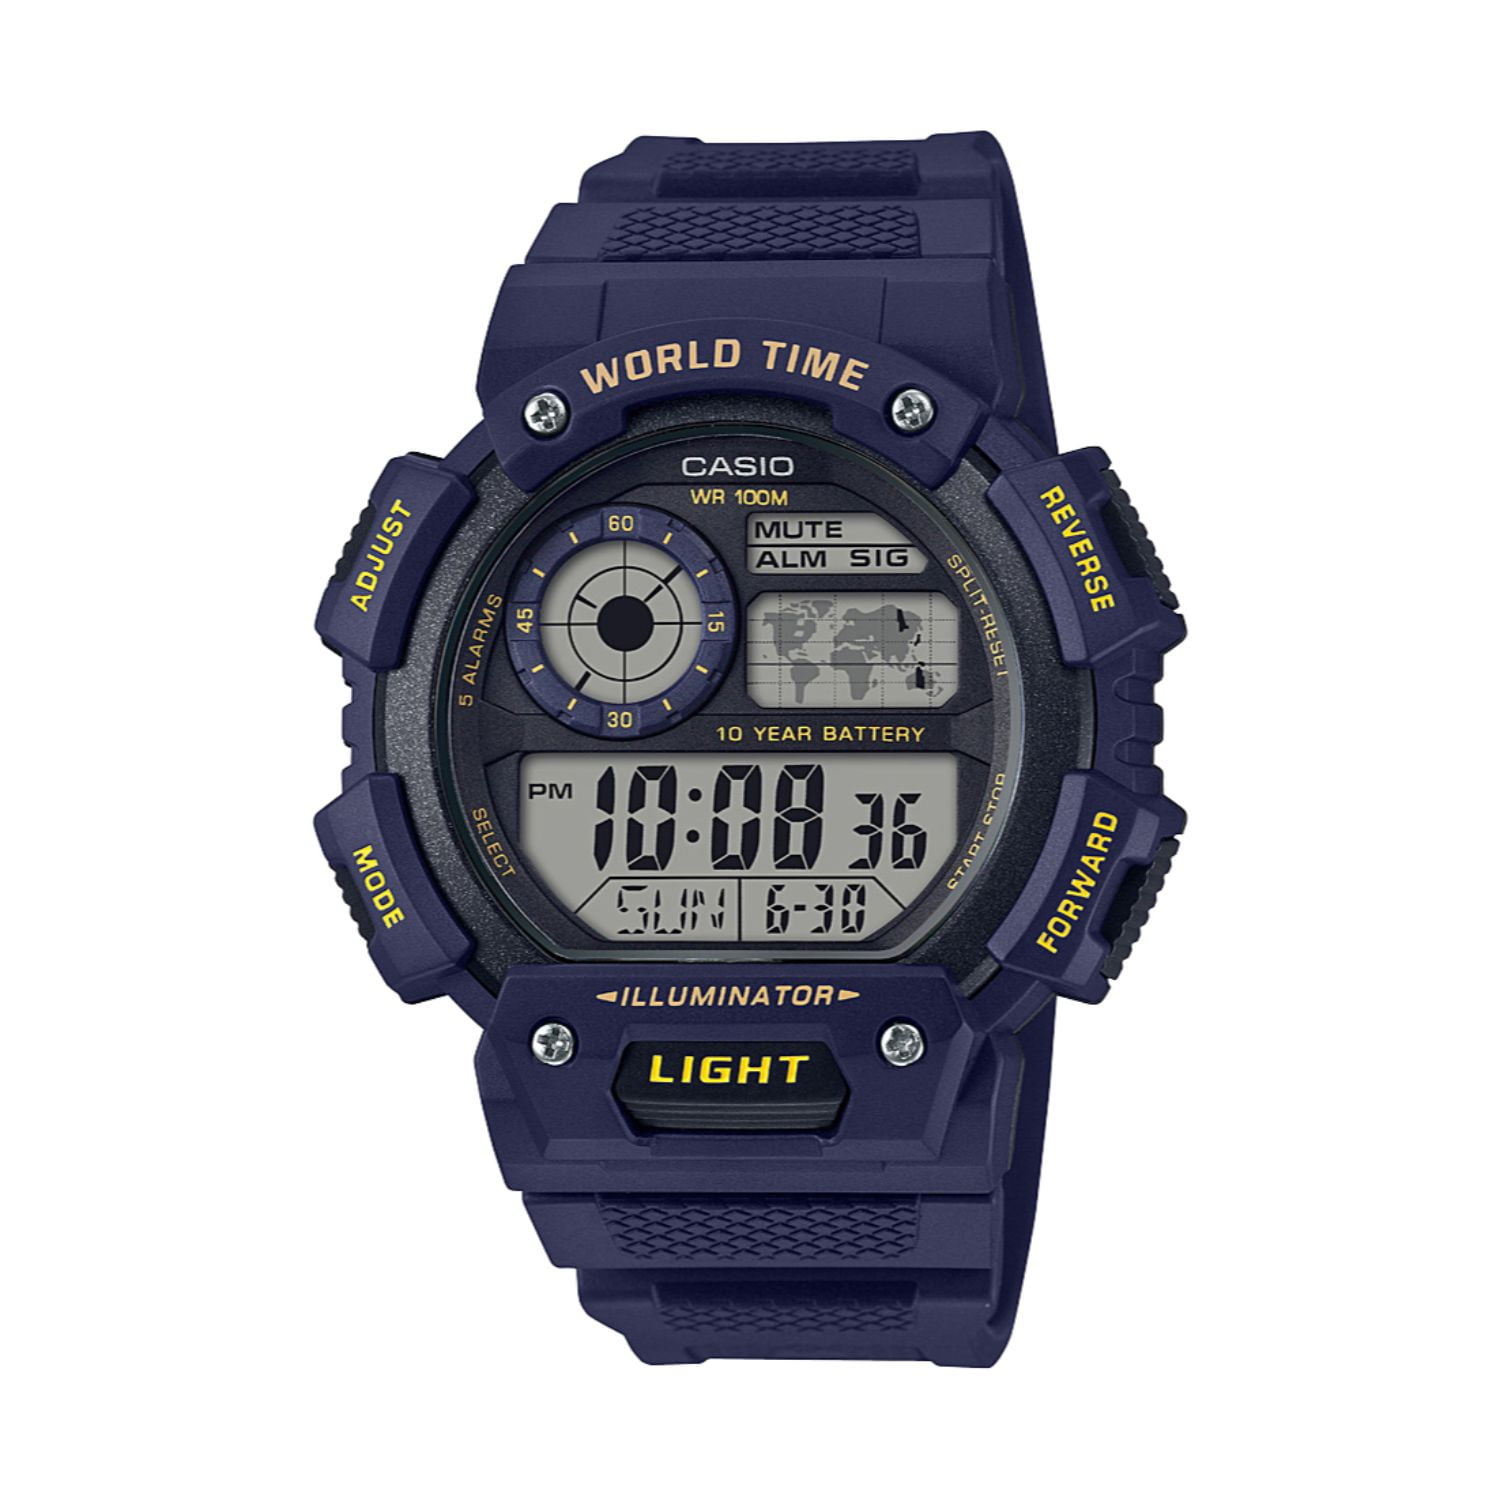 Casio Men's Digital World Time Watch, Green - Walmart.com